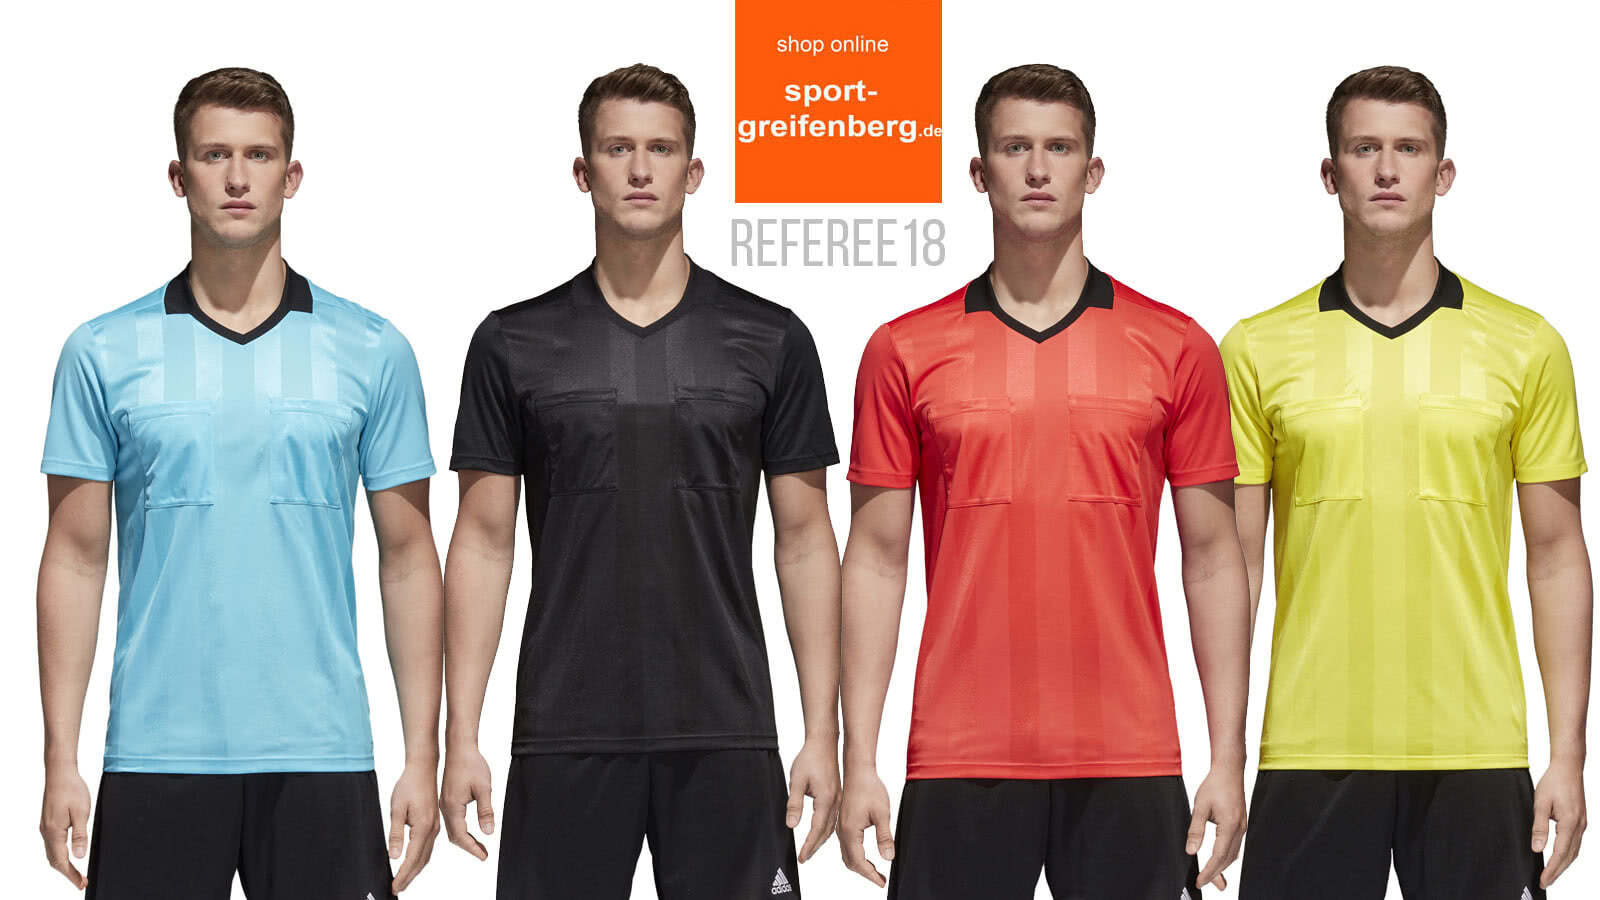 adidas referee kit, OFF 75%,Buy!